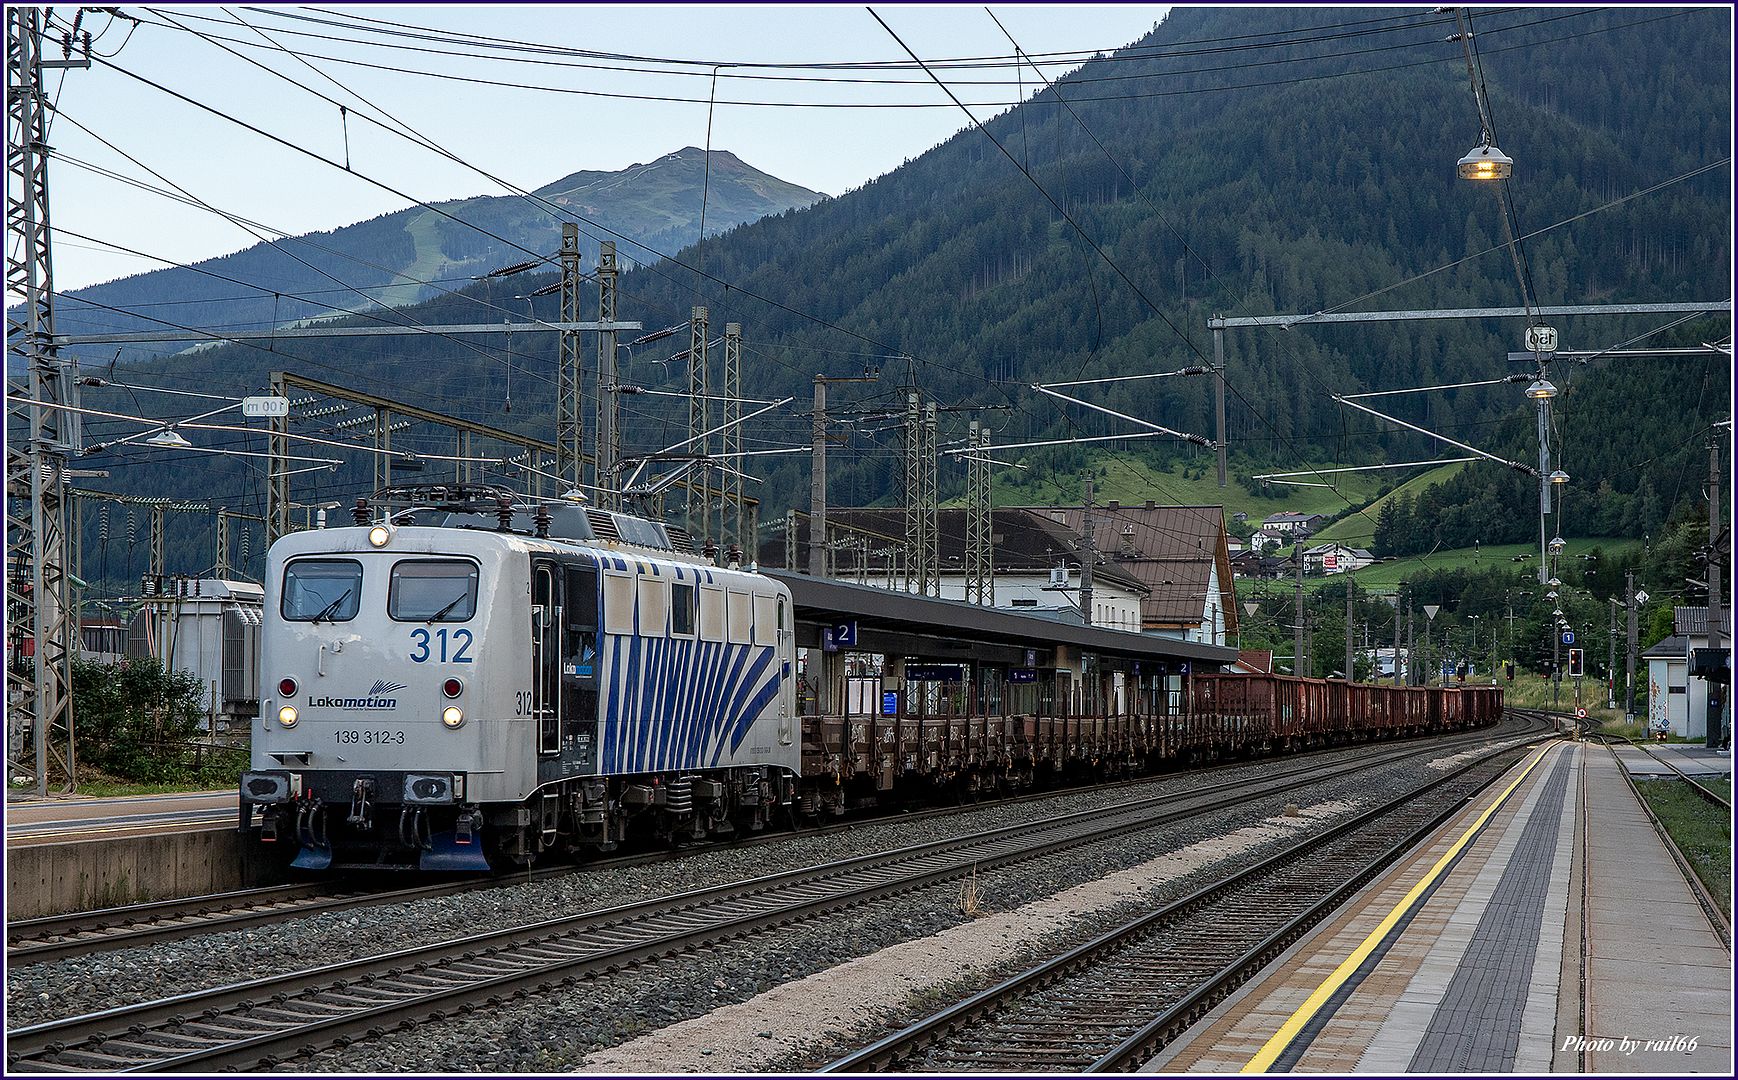 https://i51.photobucket.com/albums/f385/rail66_1/westbahn/nebenstrecken/brennerbahn/301_02_00068_zpscjnpurzm.jpg